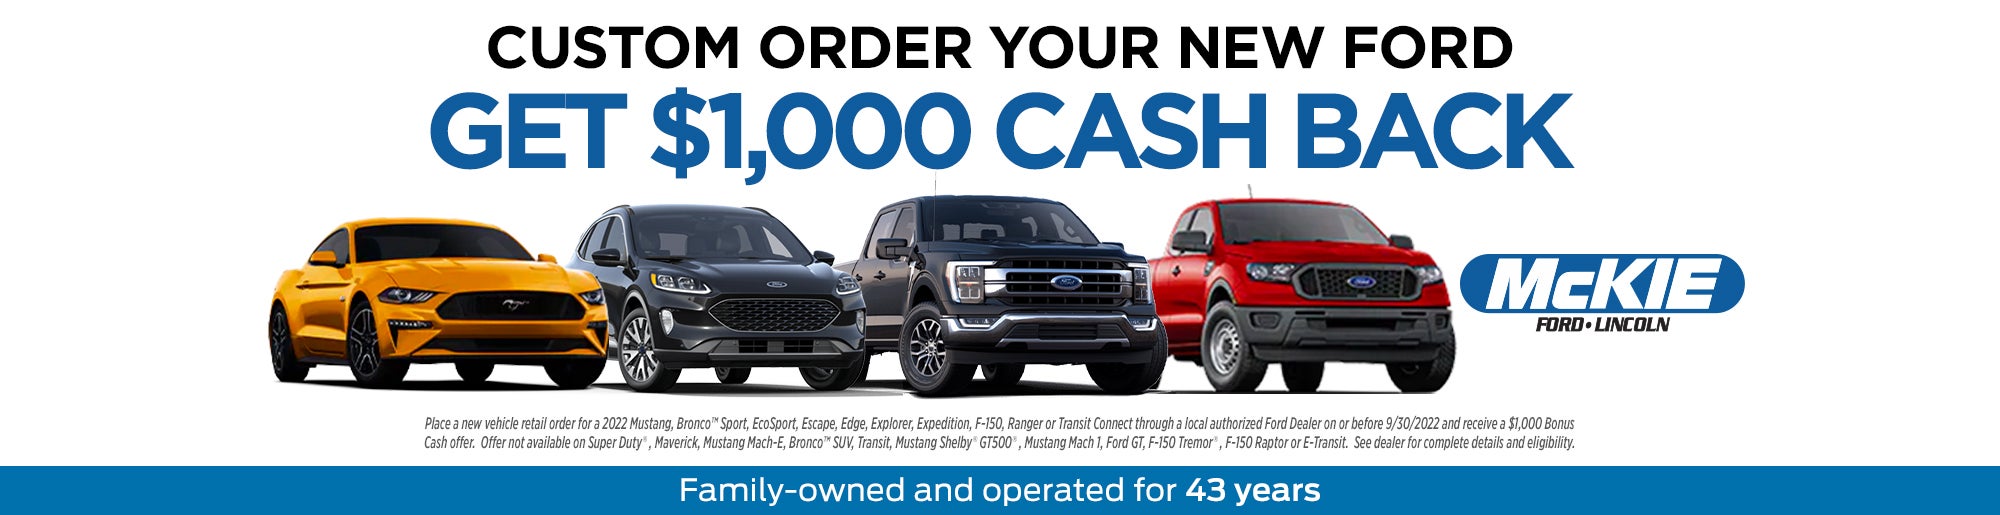 Custom Order Your New Ford Get $1,000 Cash Back